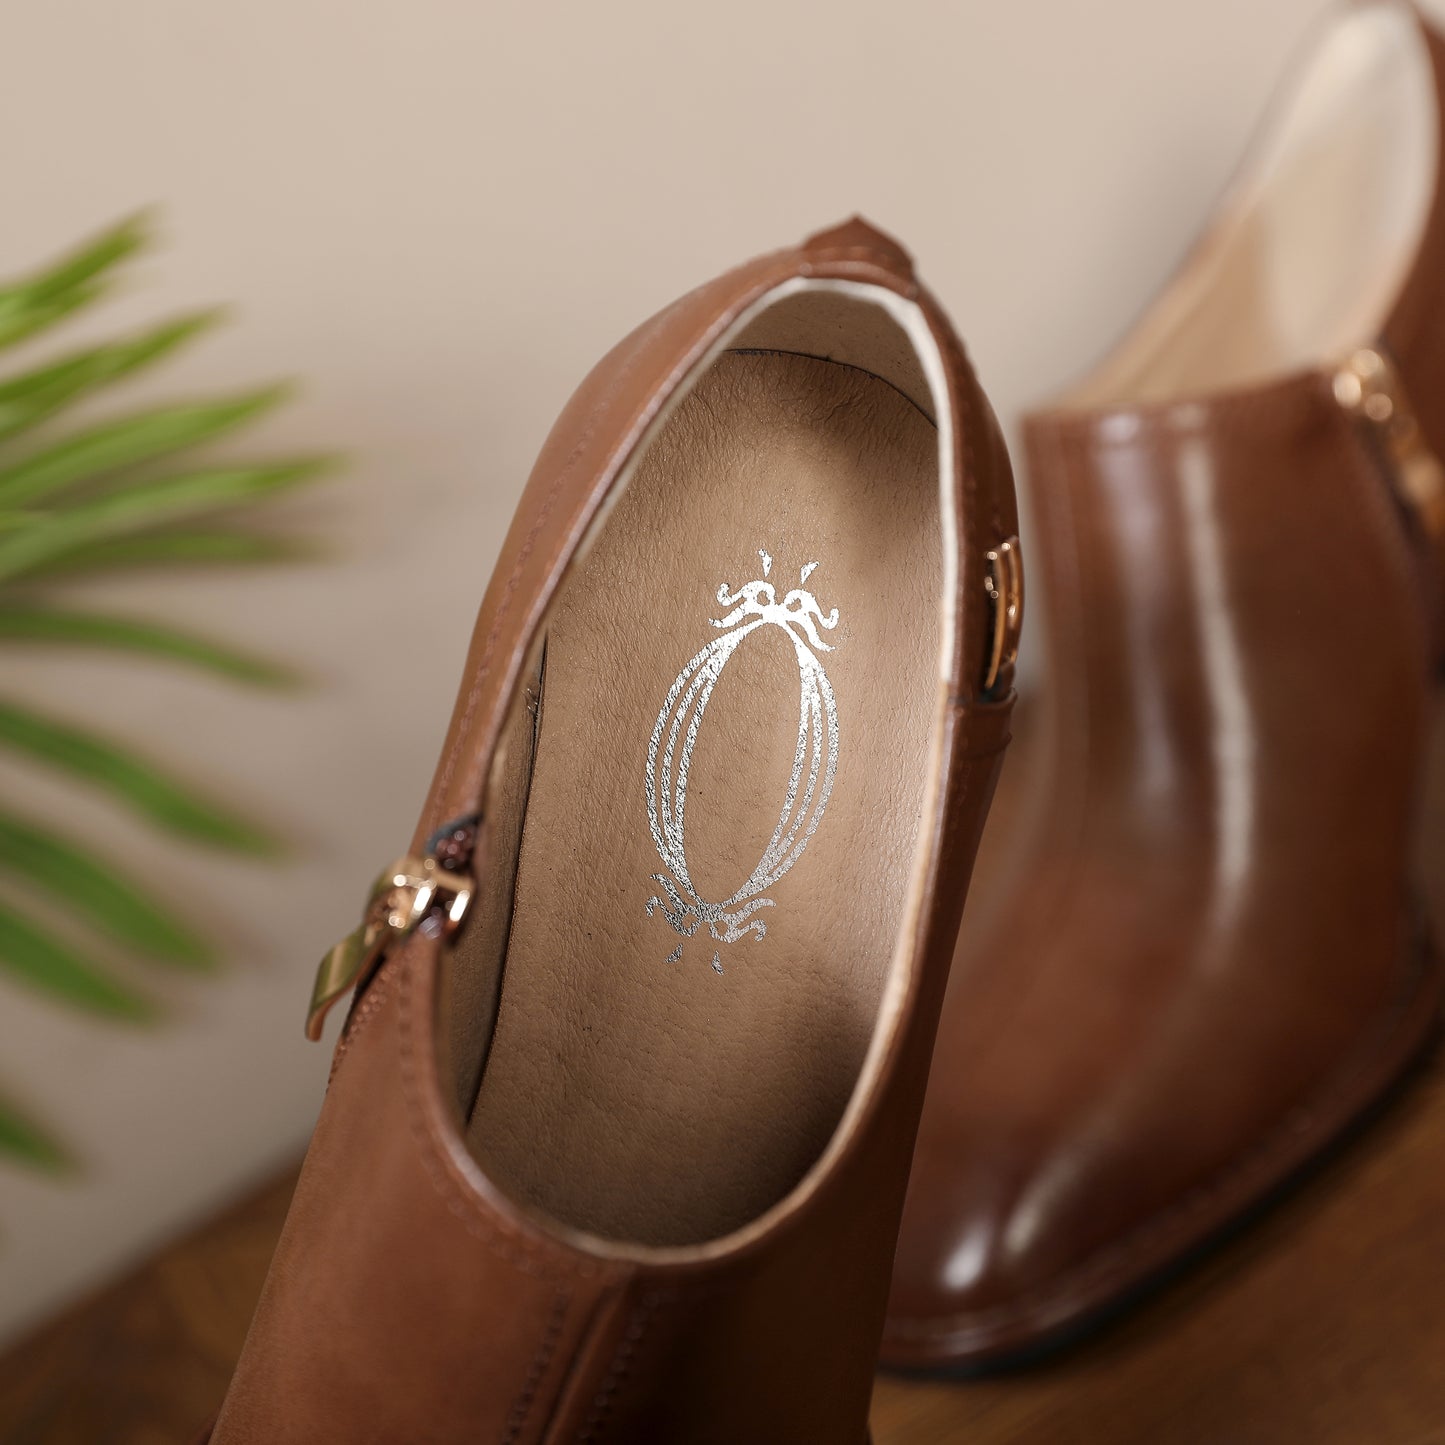 TinaCus Women's Square Toe Genuine Leather Handmade Side Zipper Mid Chunky Heel Retro Pumps Shoes